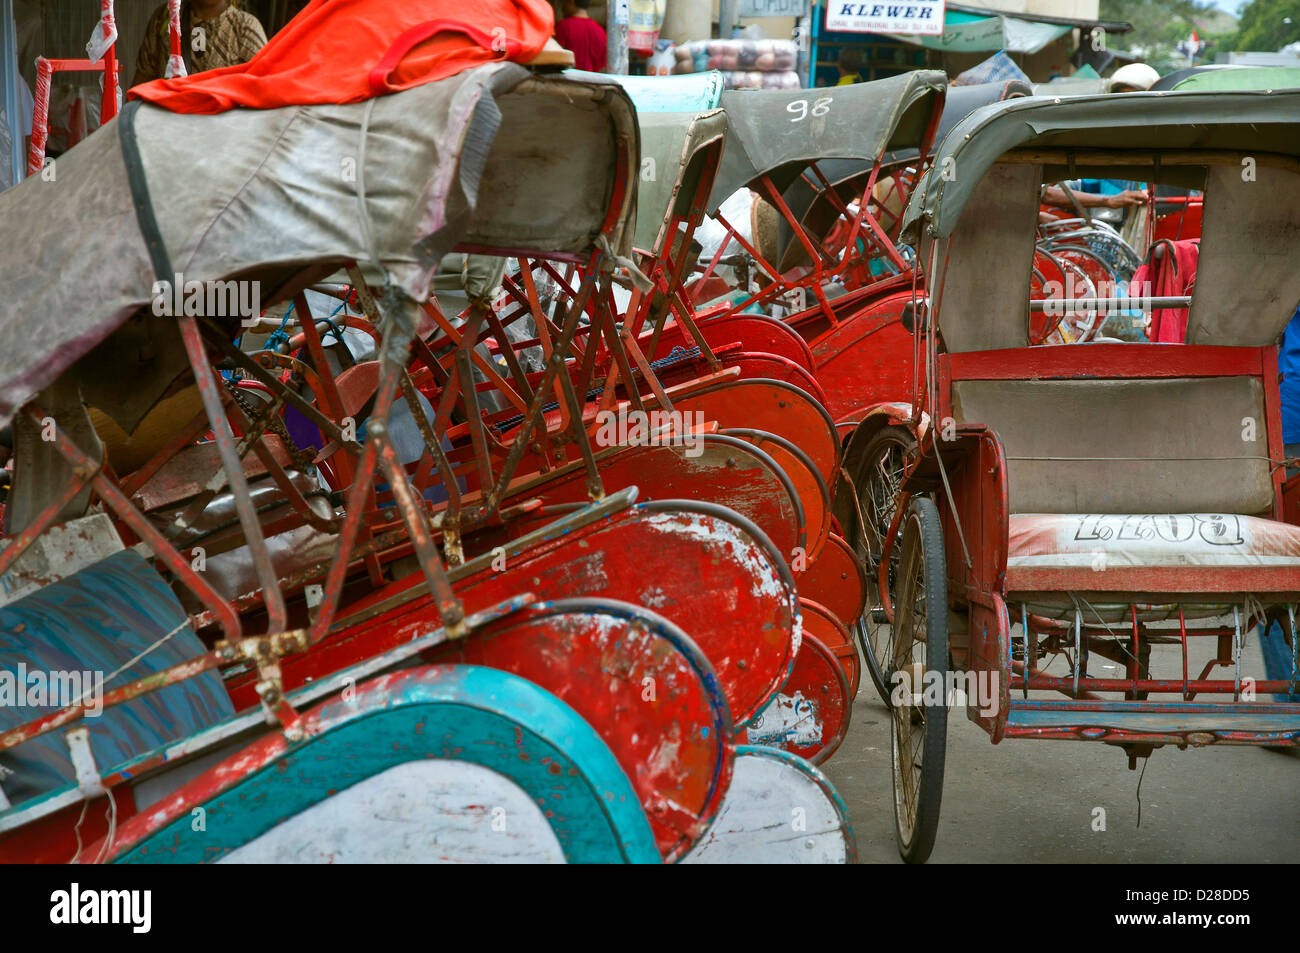 Trishaws in the street of Surakarta, Indonesia Stock Photo